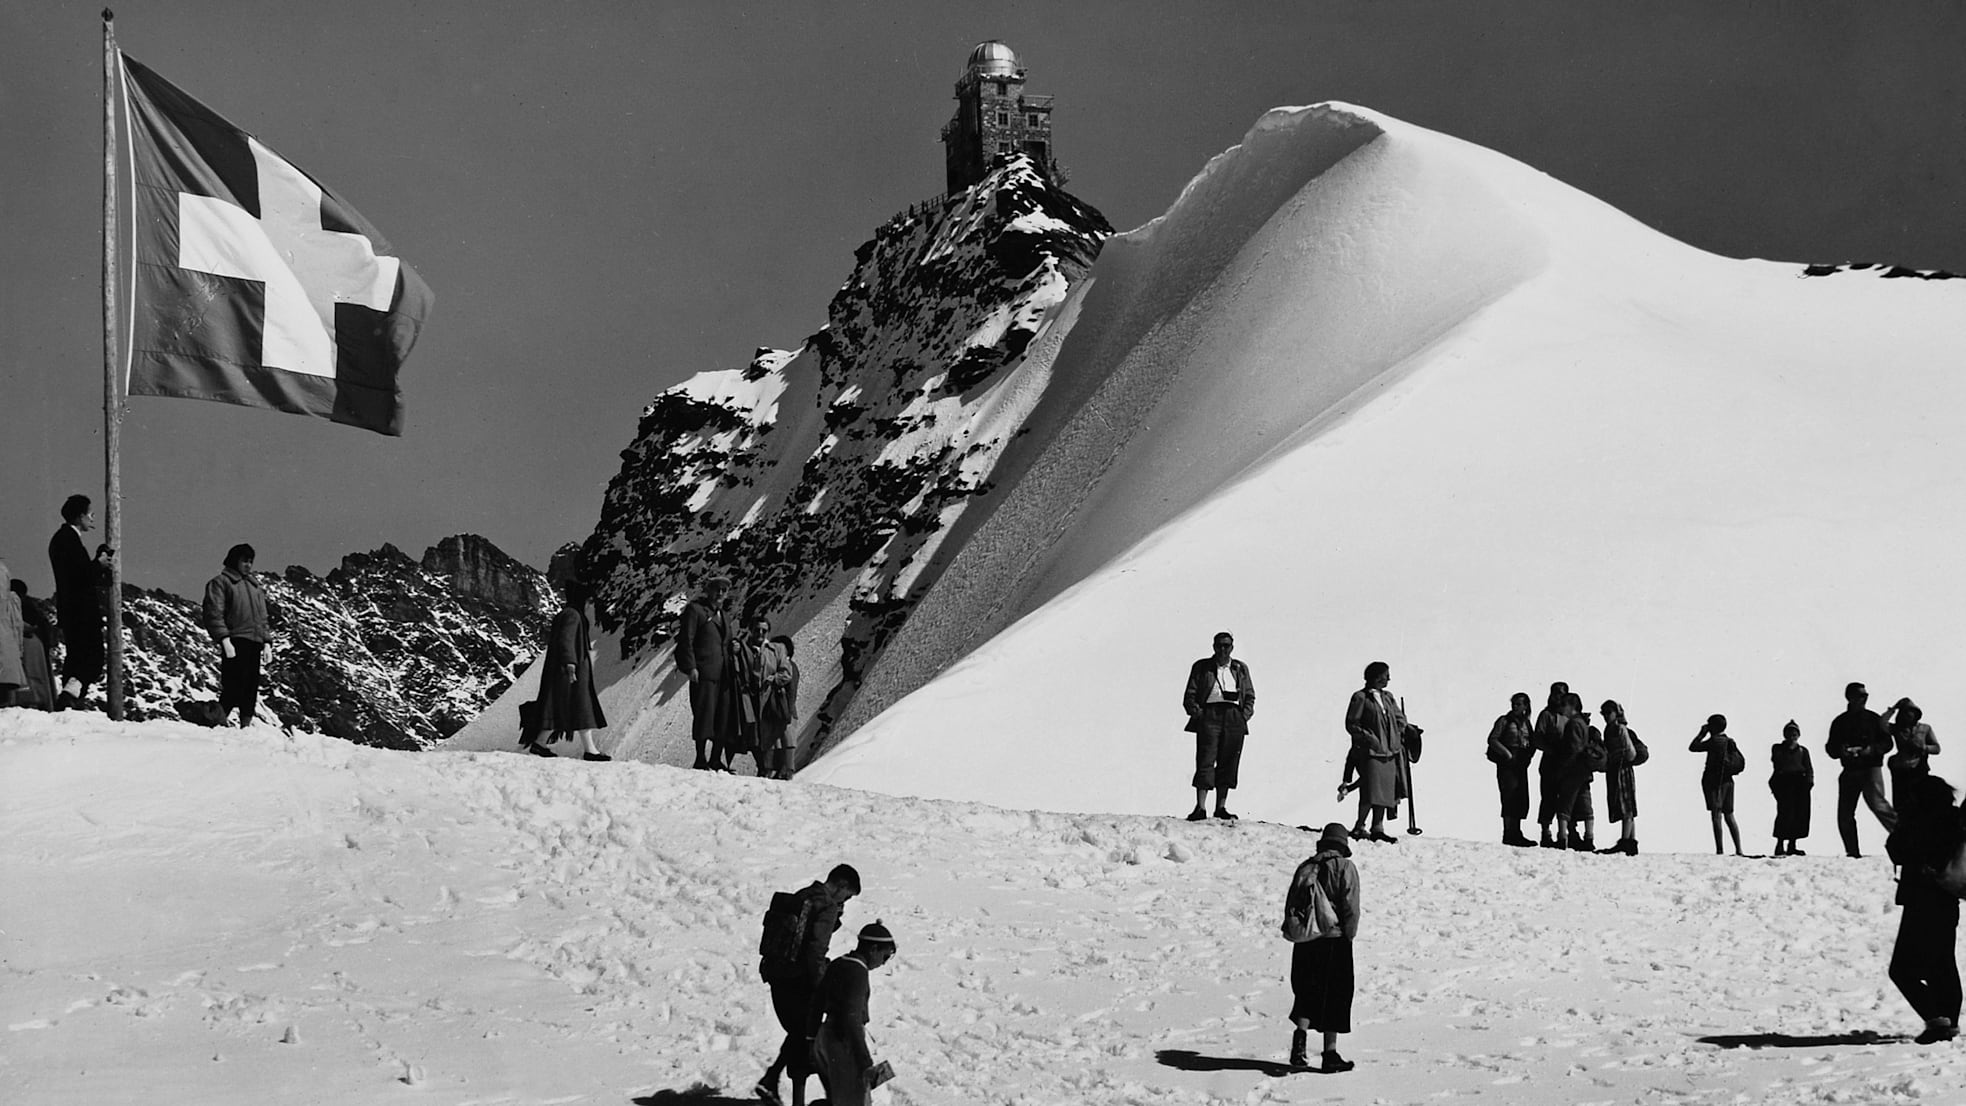 Jungfrau bahn nostalgie jungfraujoch plateau hinten sphinx